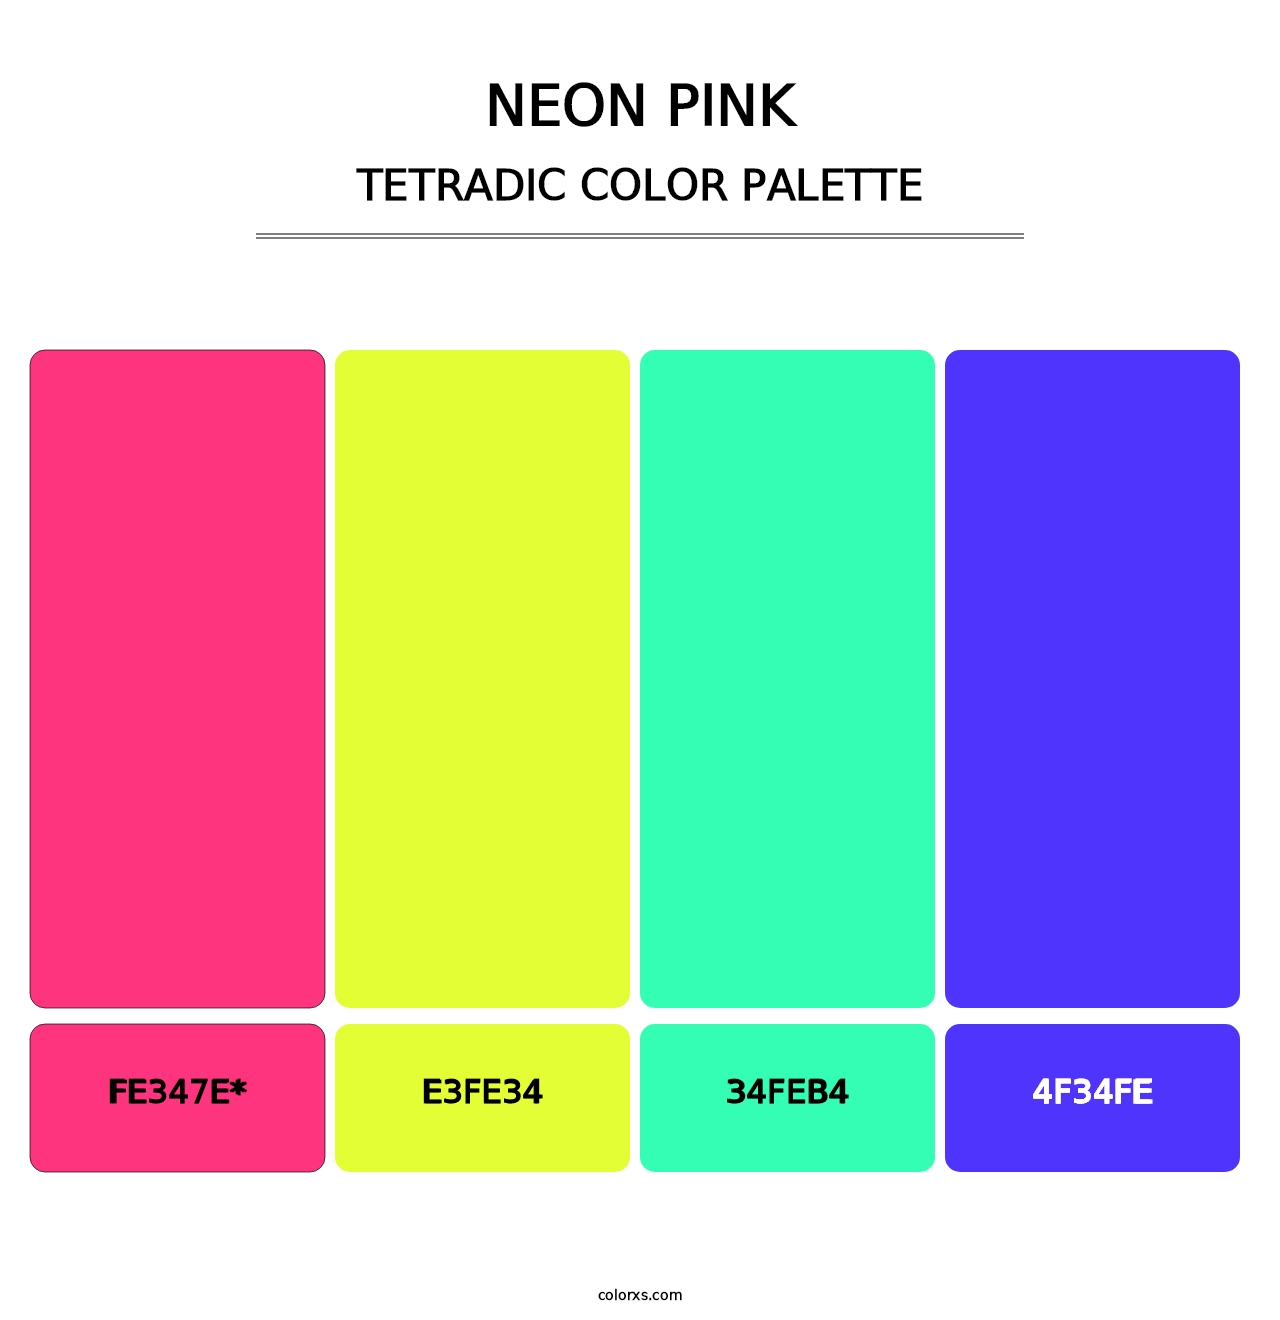 Neon Pink - Tetradic Color Palette